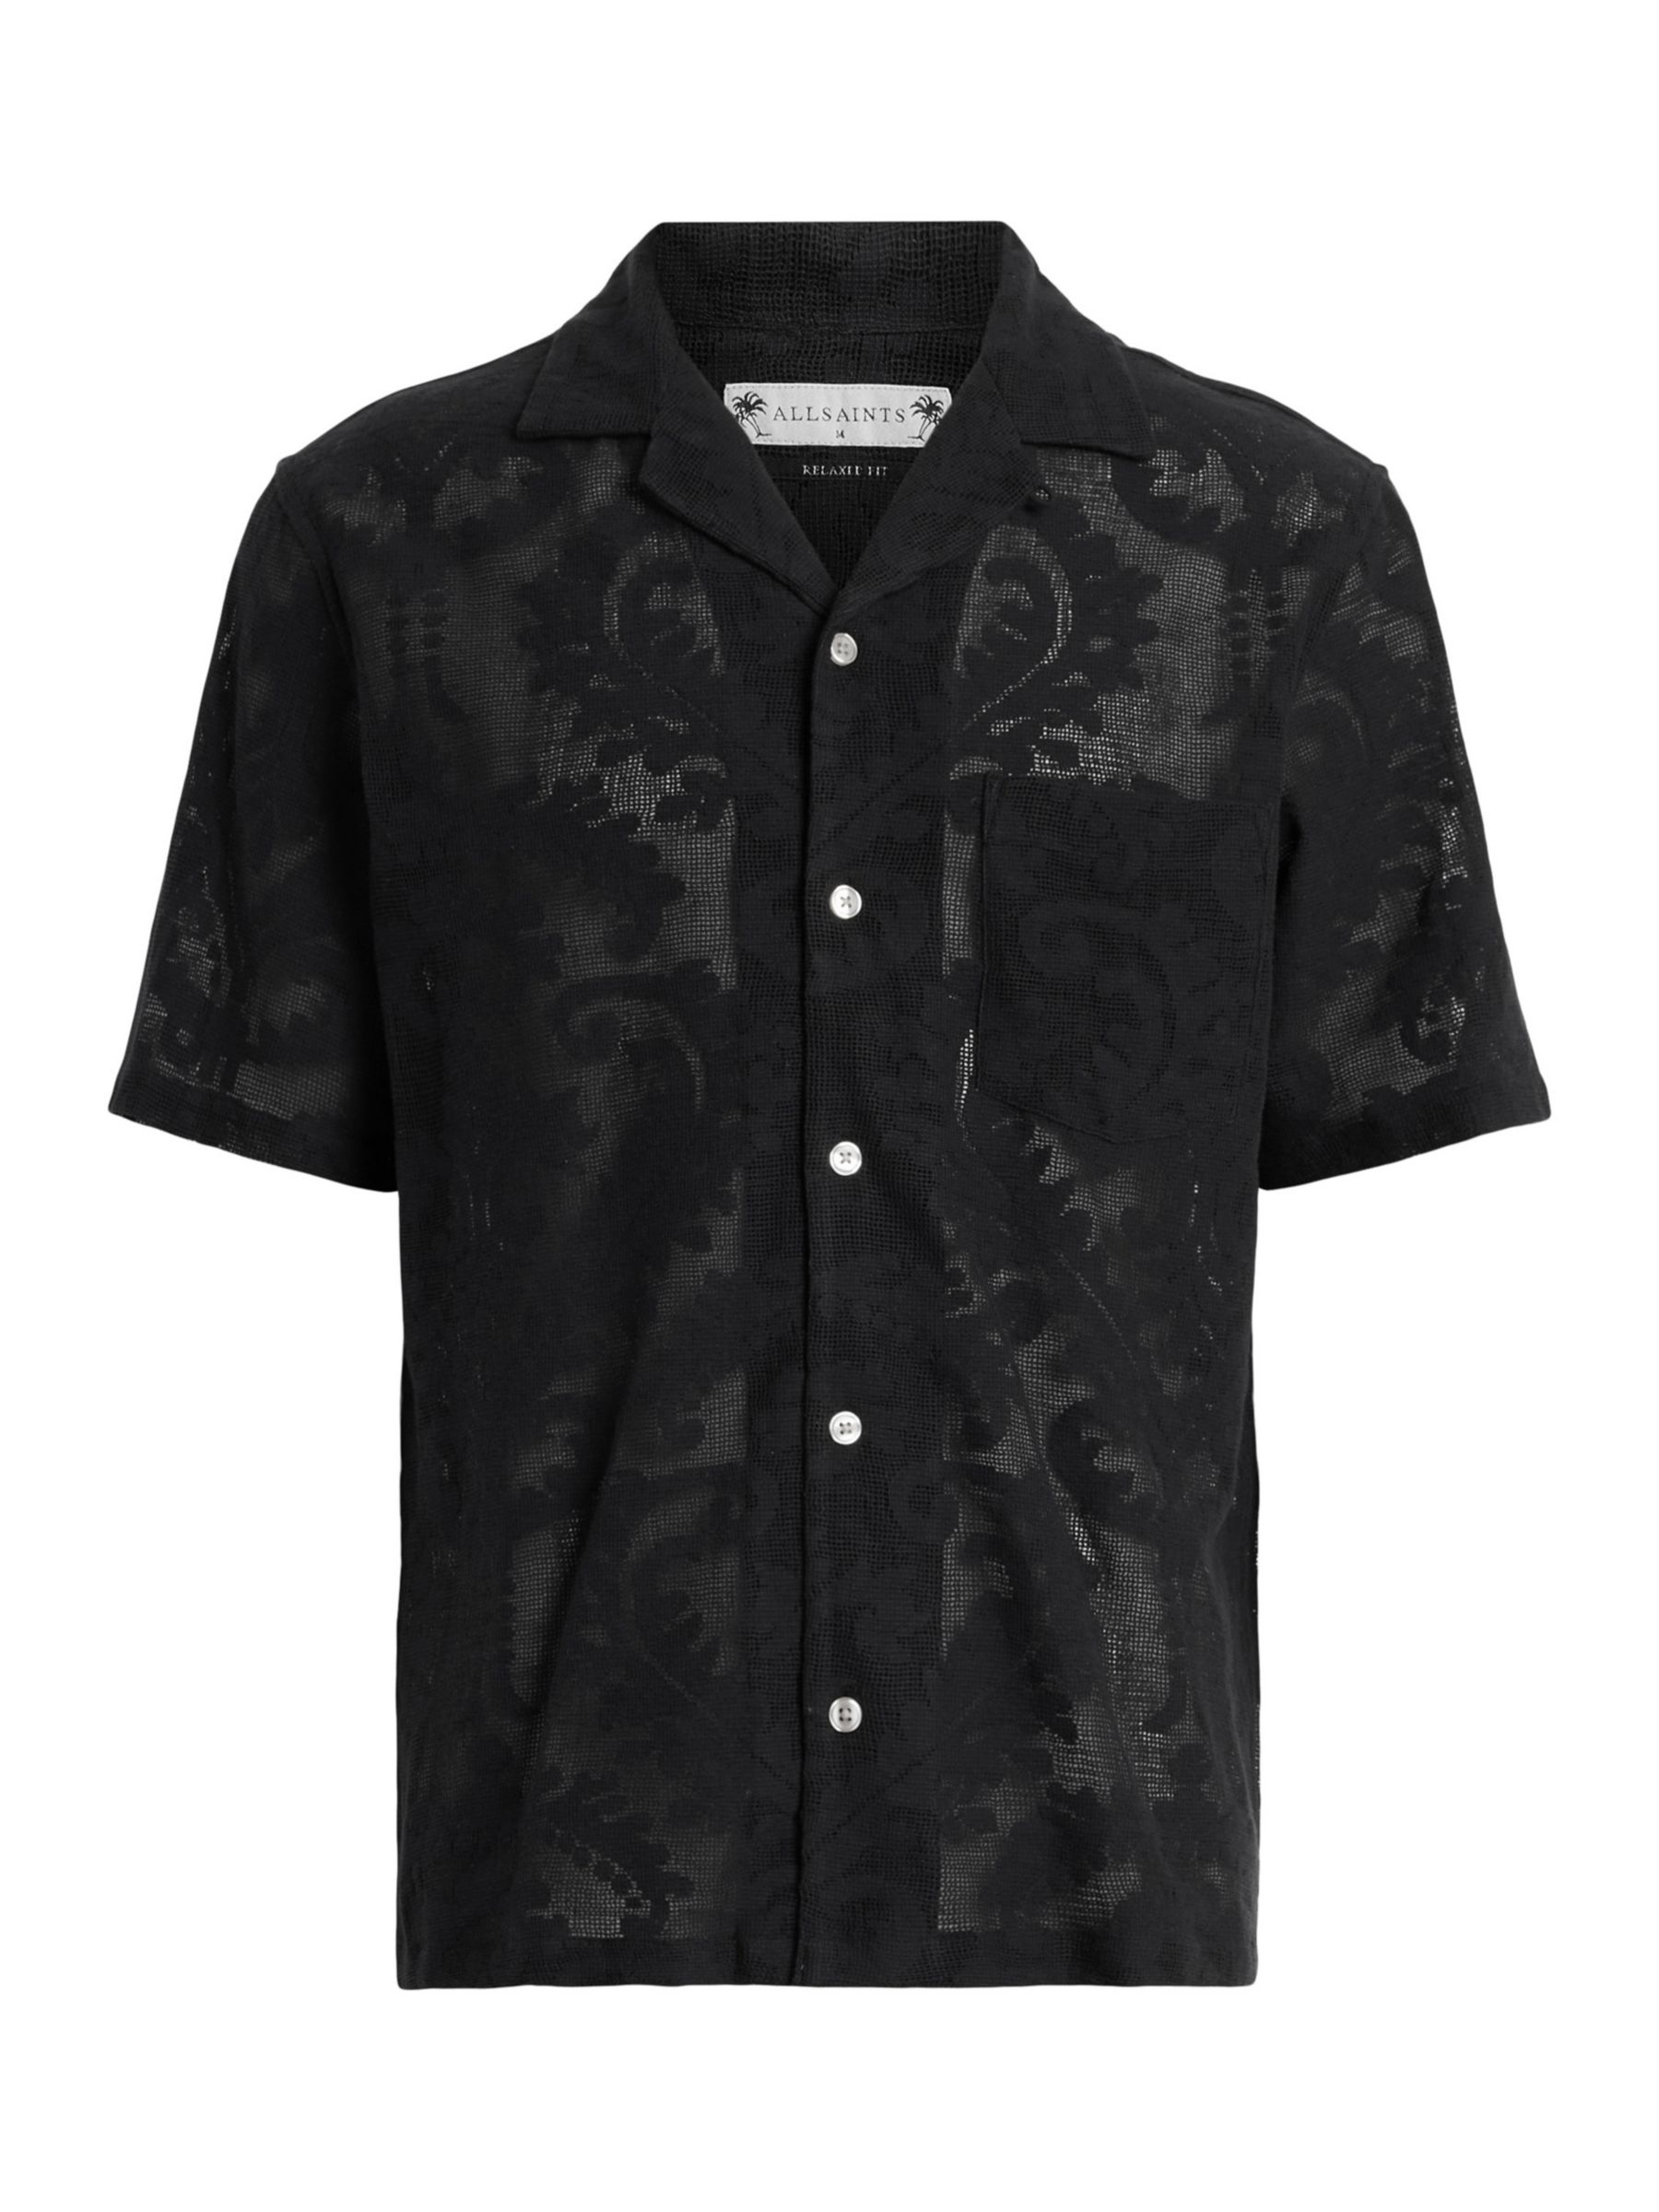 AllSaints Cerrito Short Sleeve Shirt, Jet Black, L